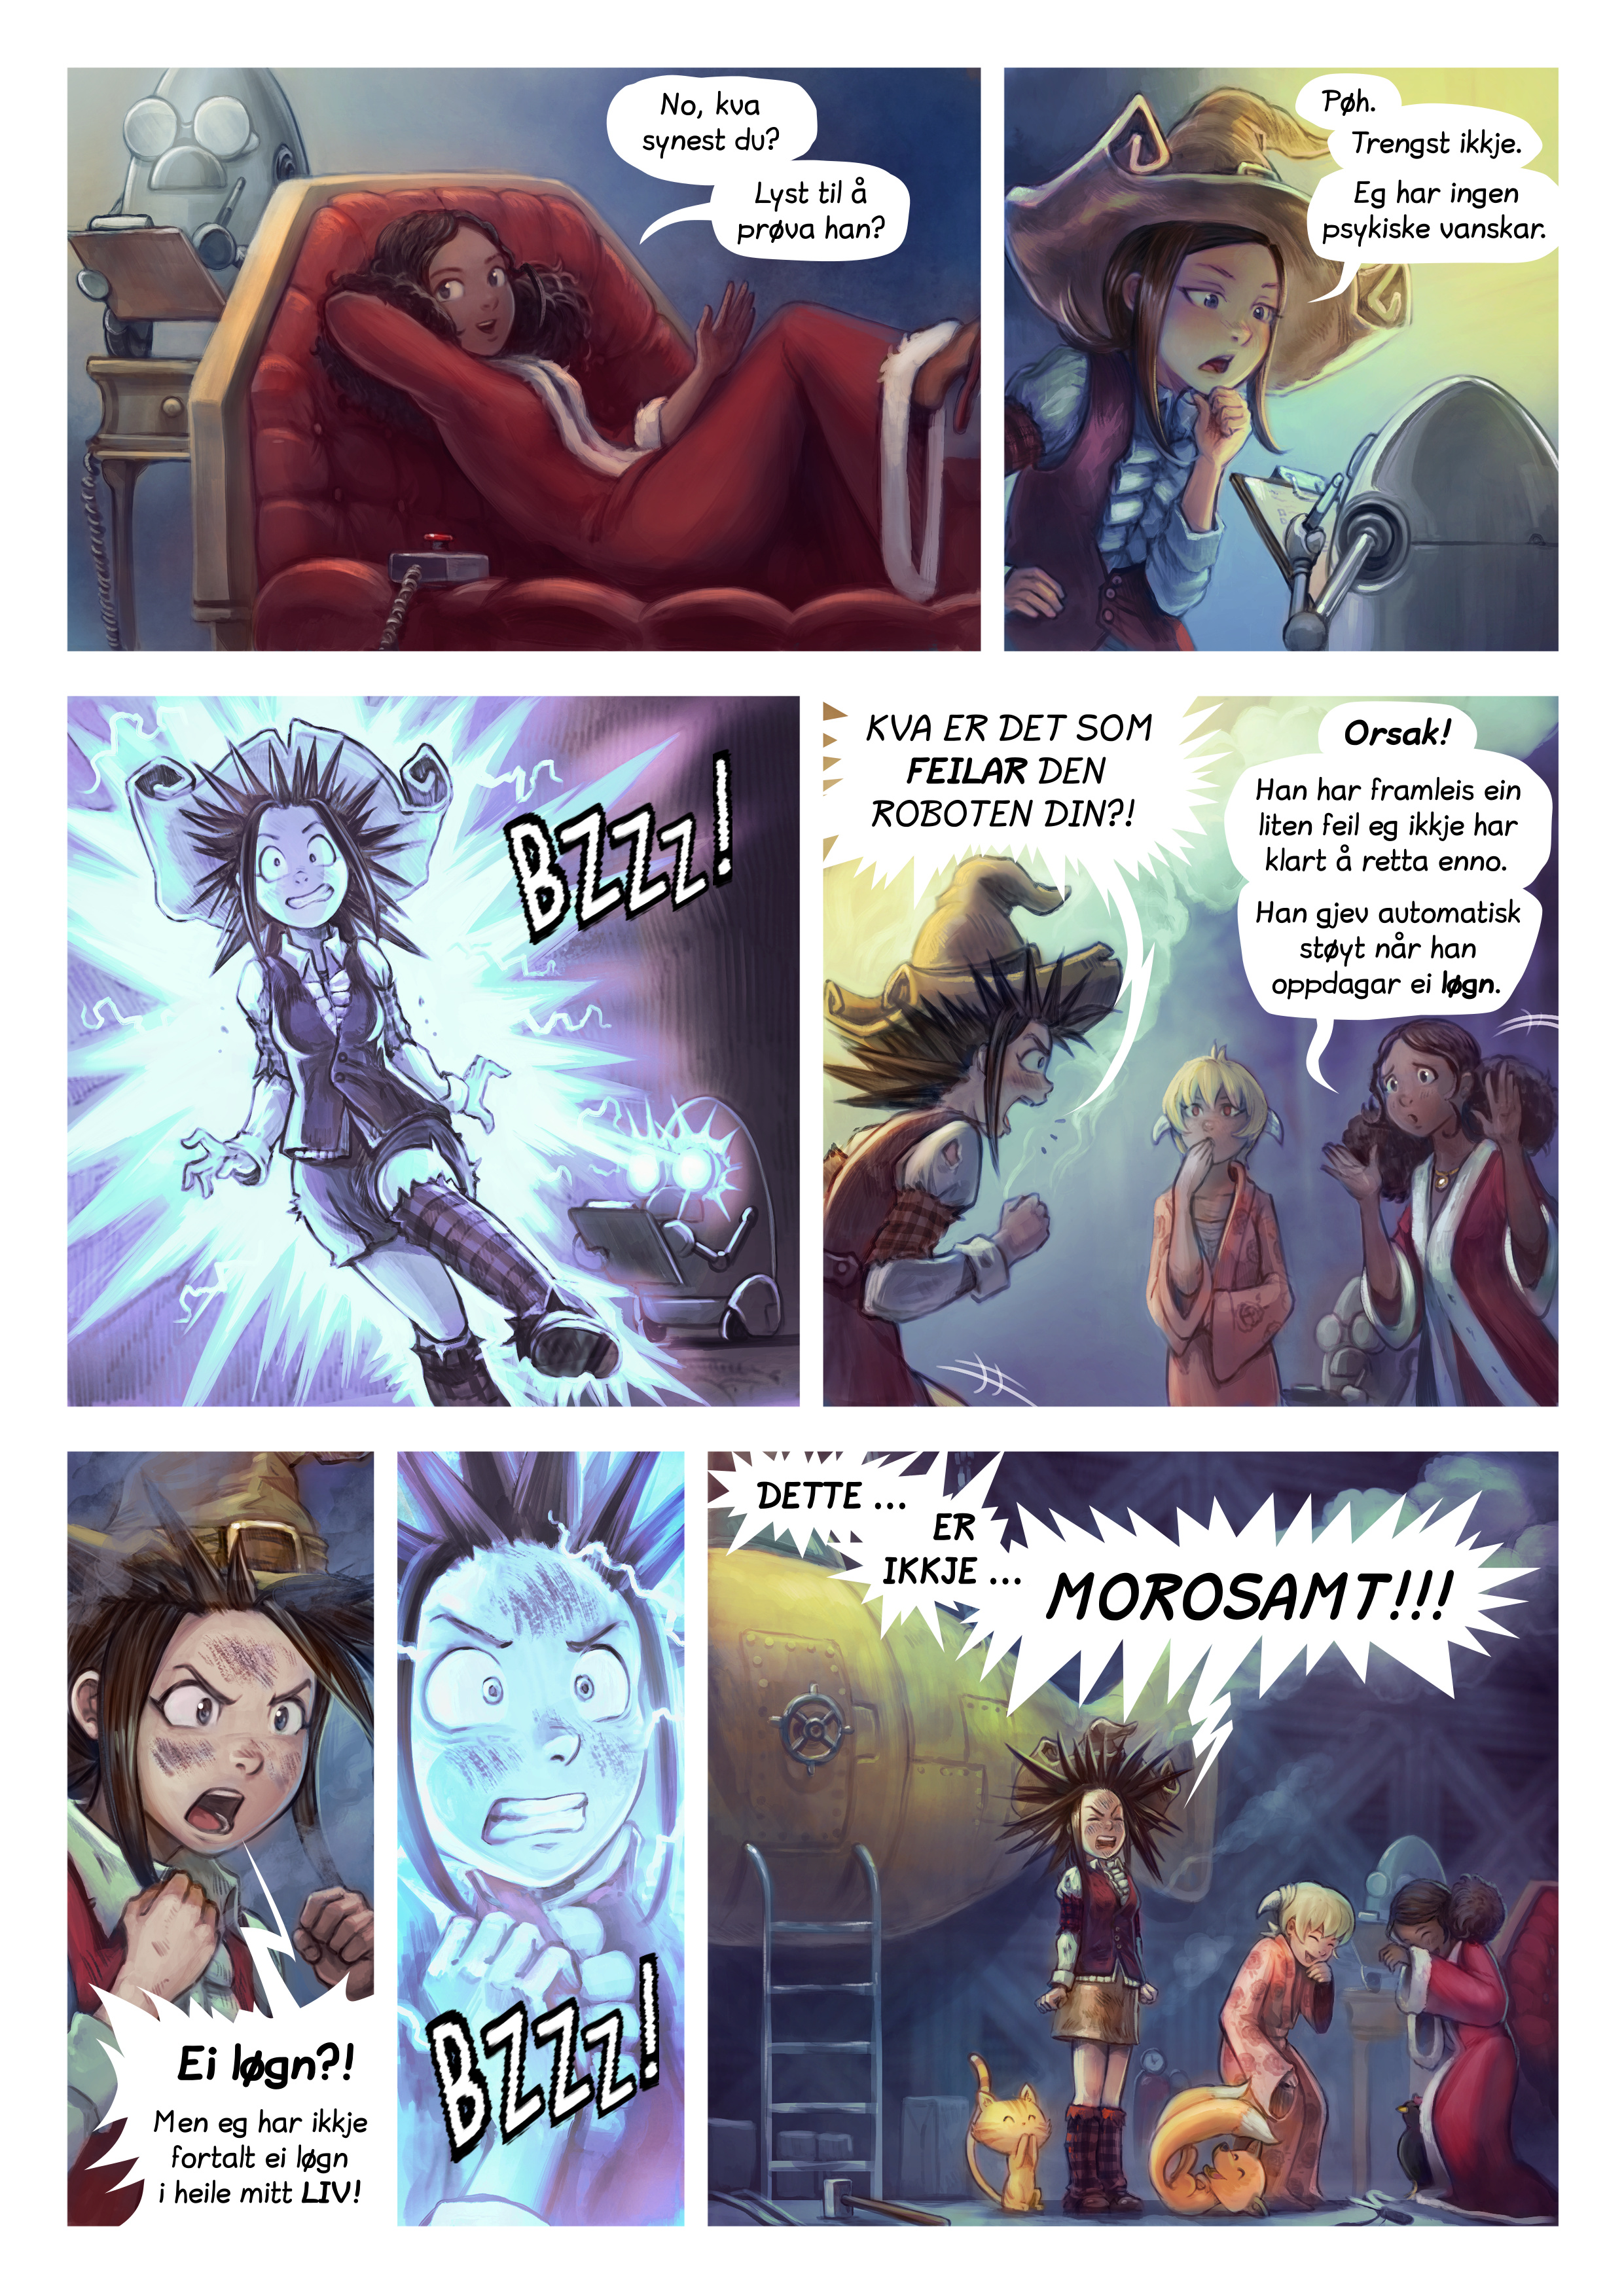 Episode 27: Oppfinninga til Koriander, Page 4